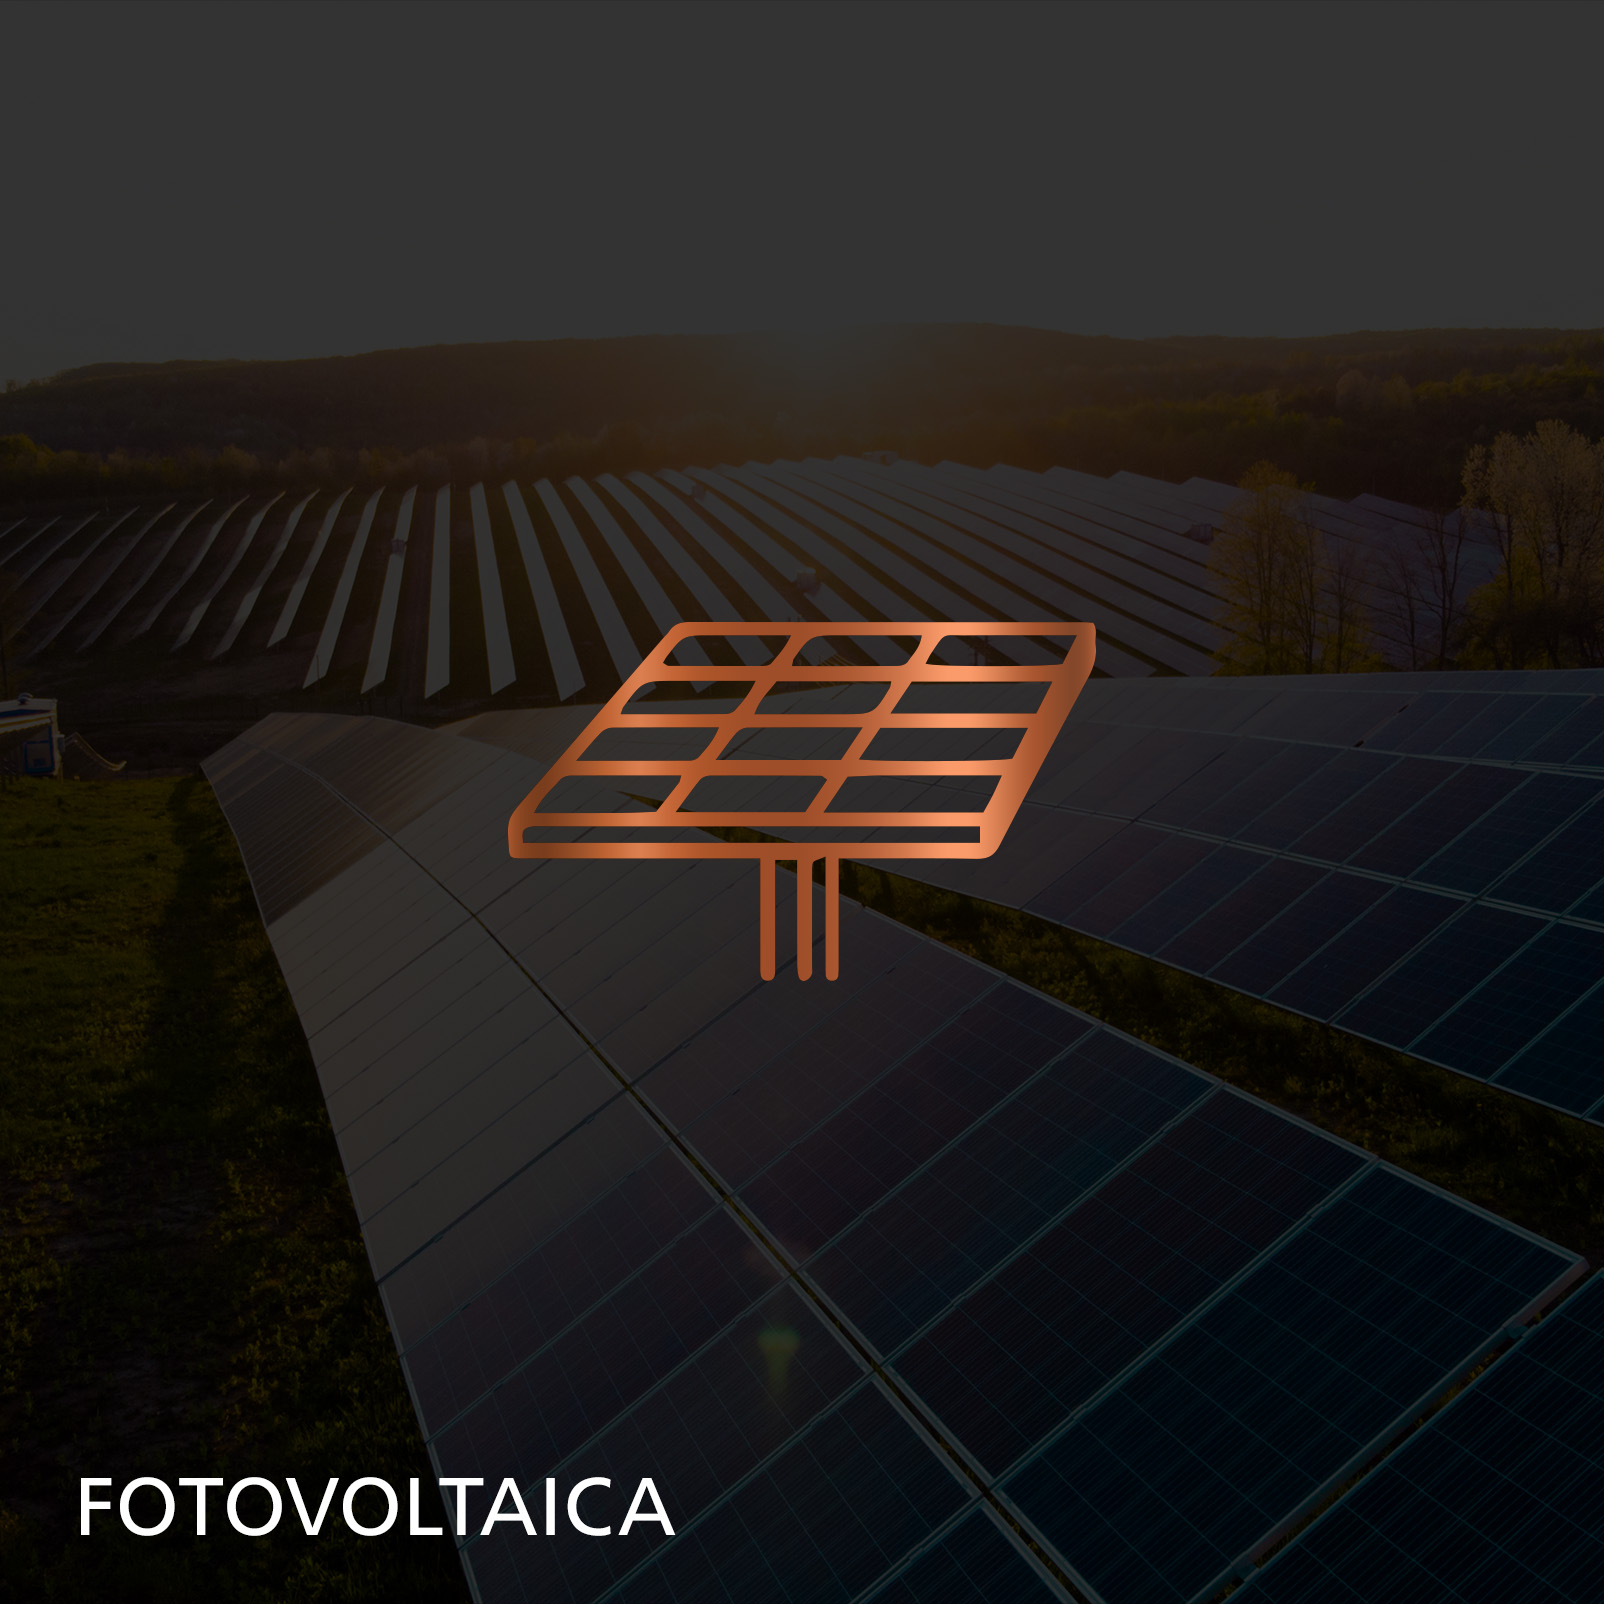 Páneles solares de la Industria Fotovoltaica 